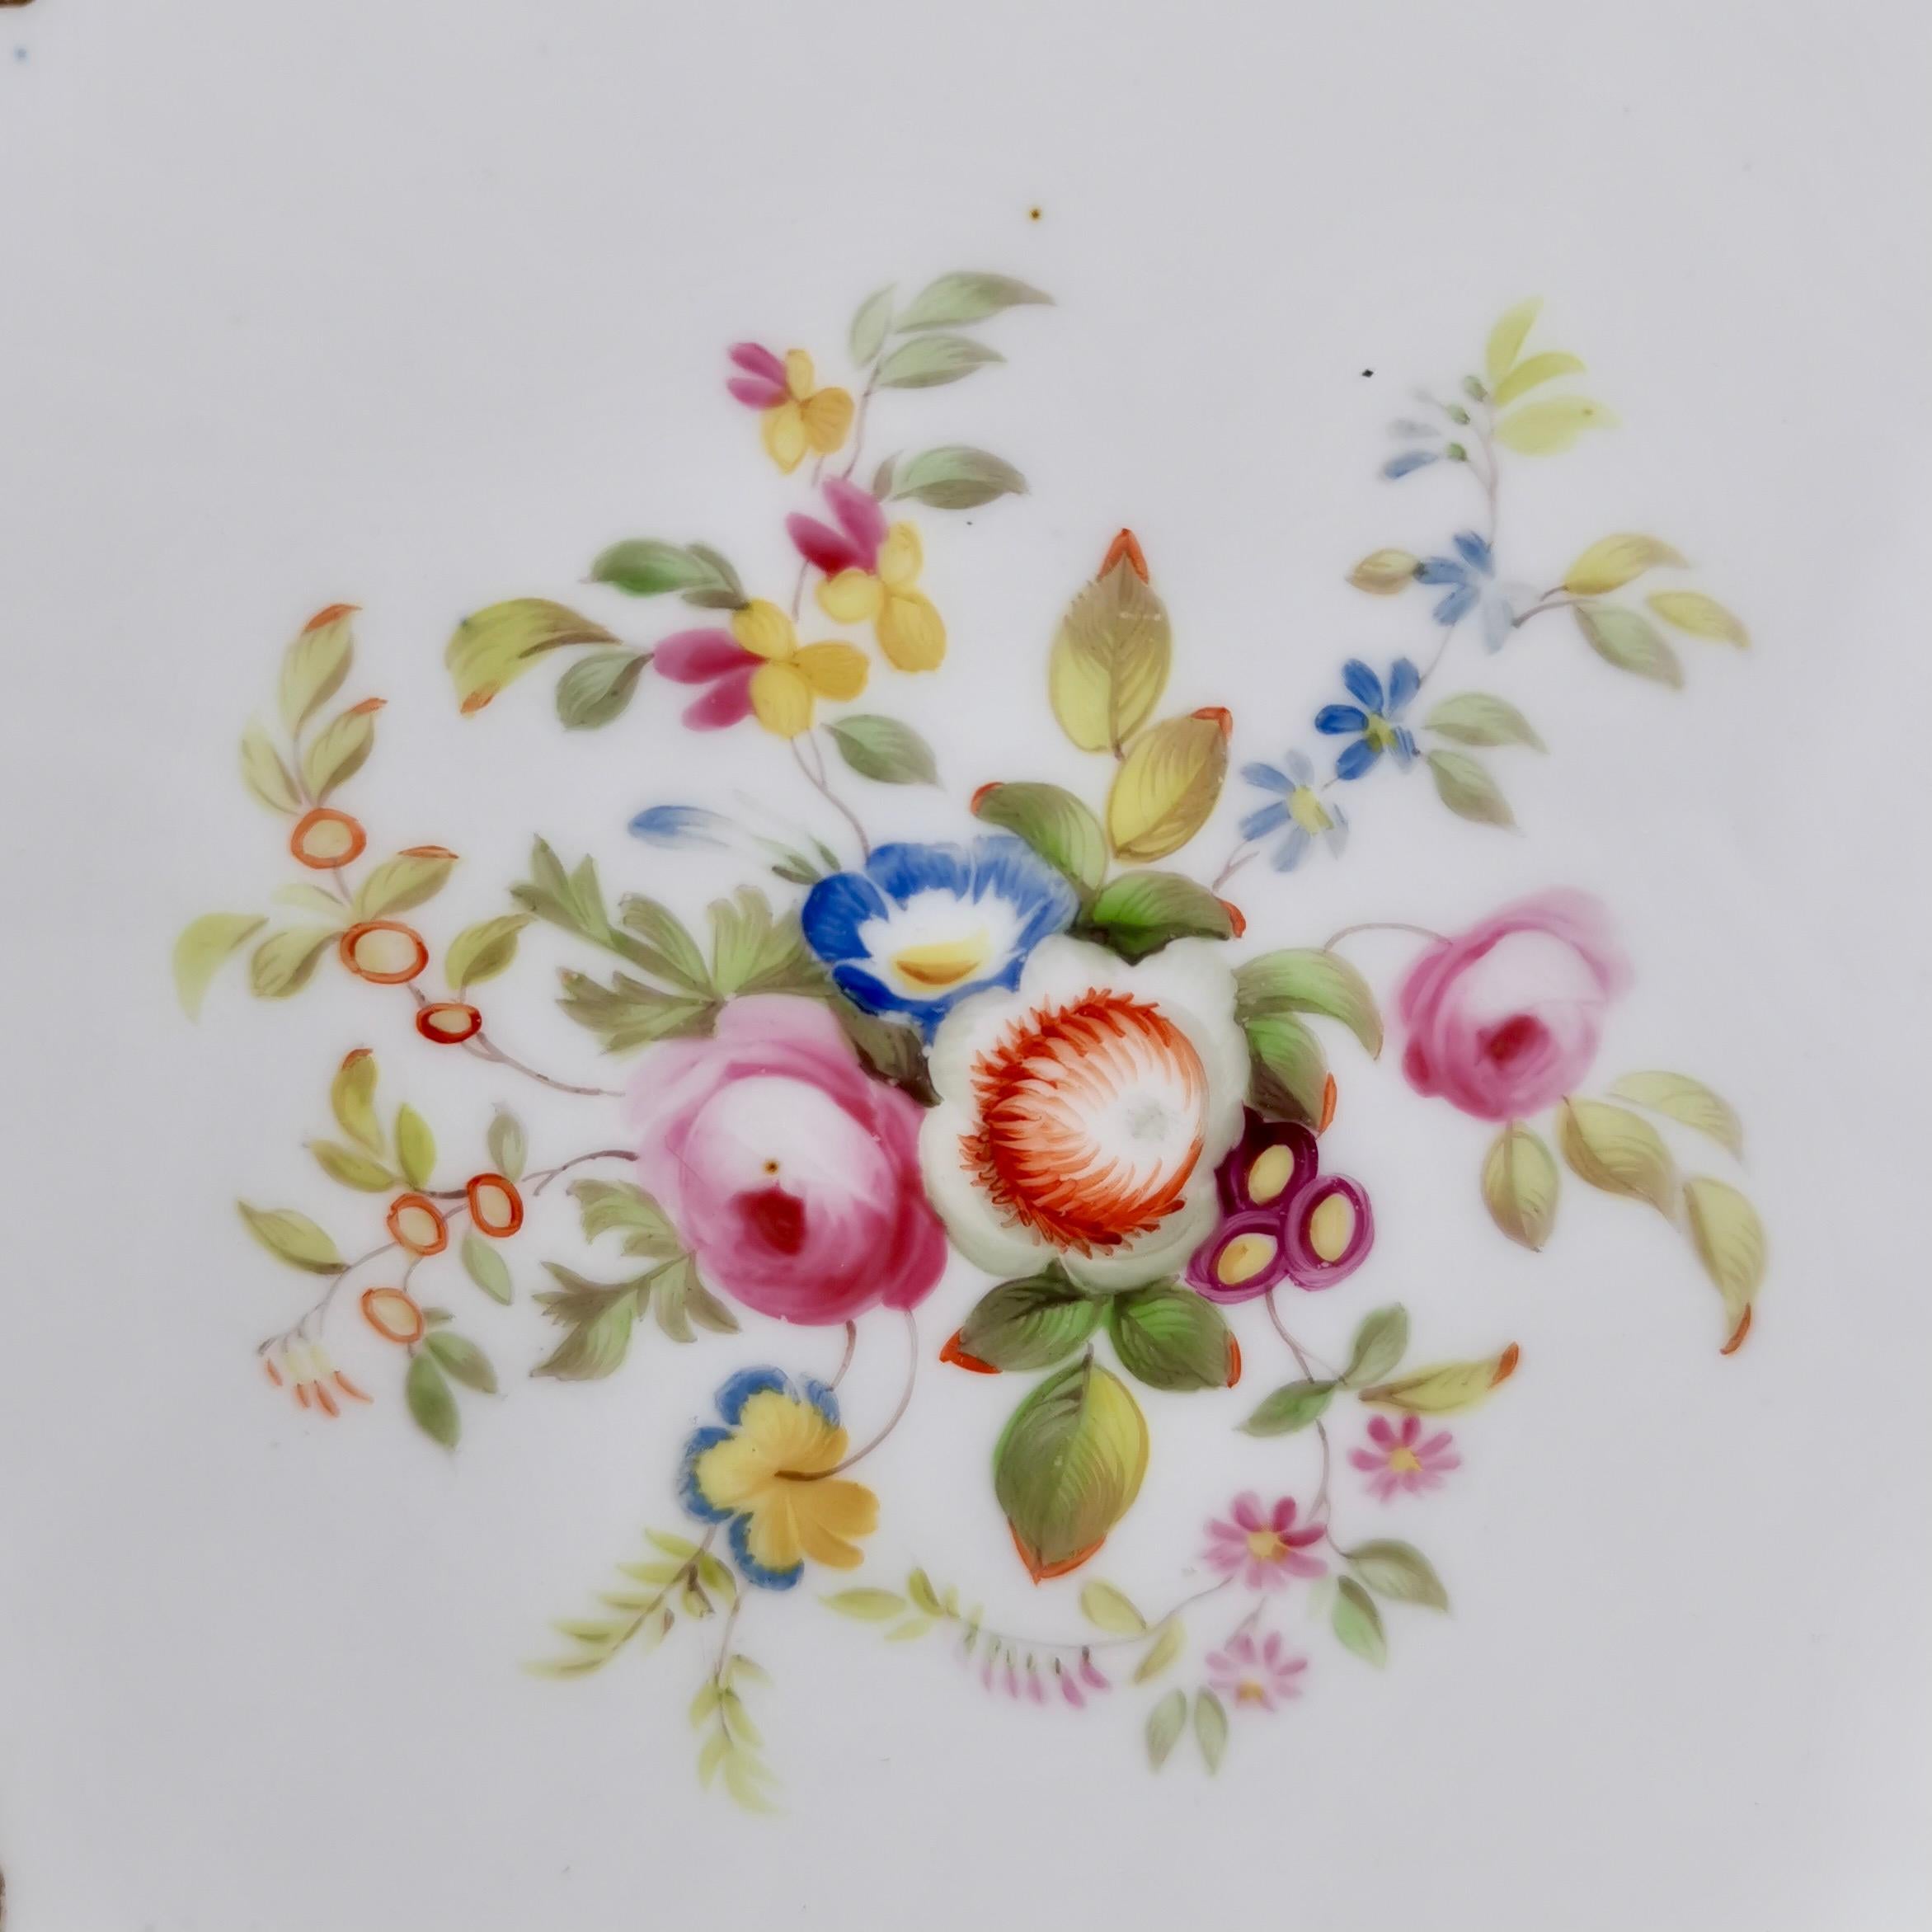 English Minton Porcelain Plate, Cobalt Blue with Floral Reserves, Victorian ca 1840